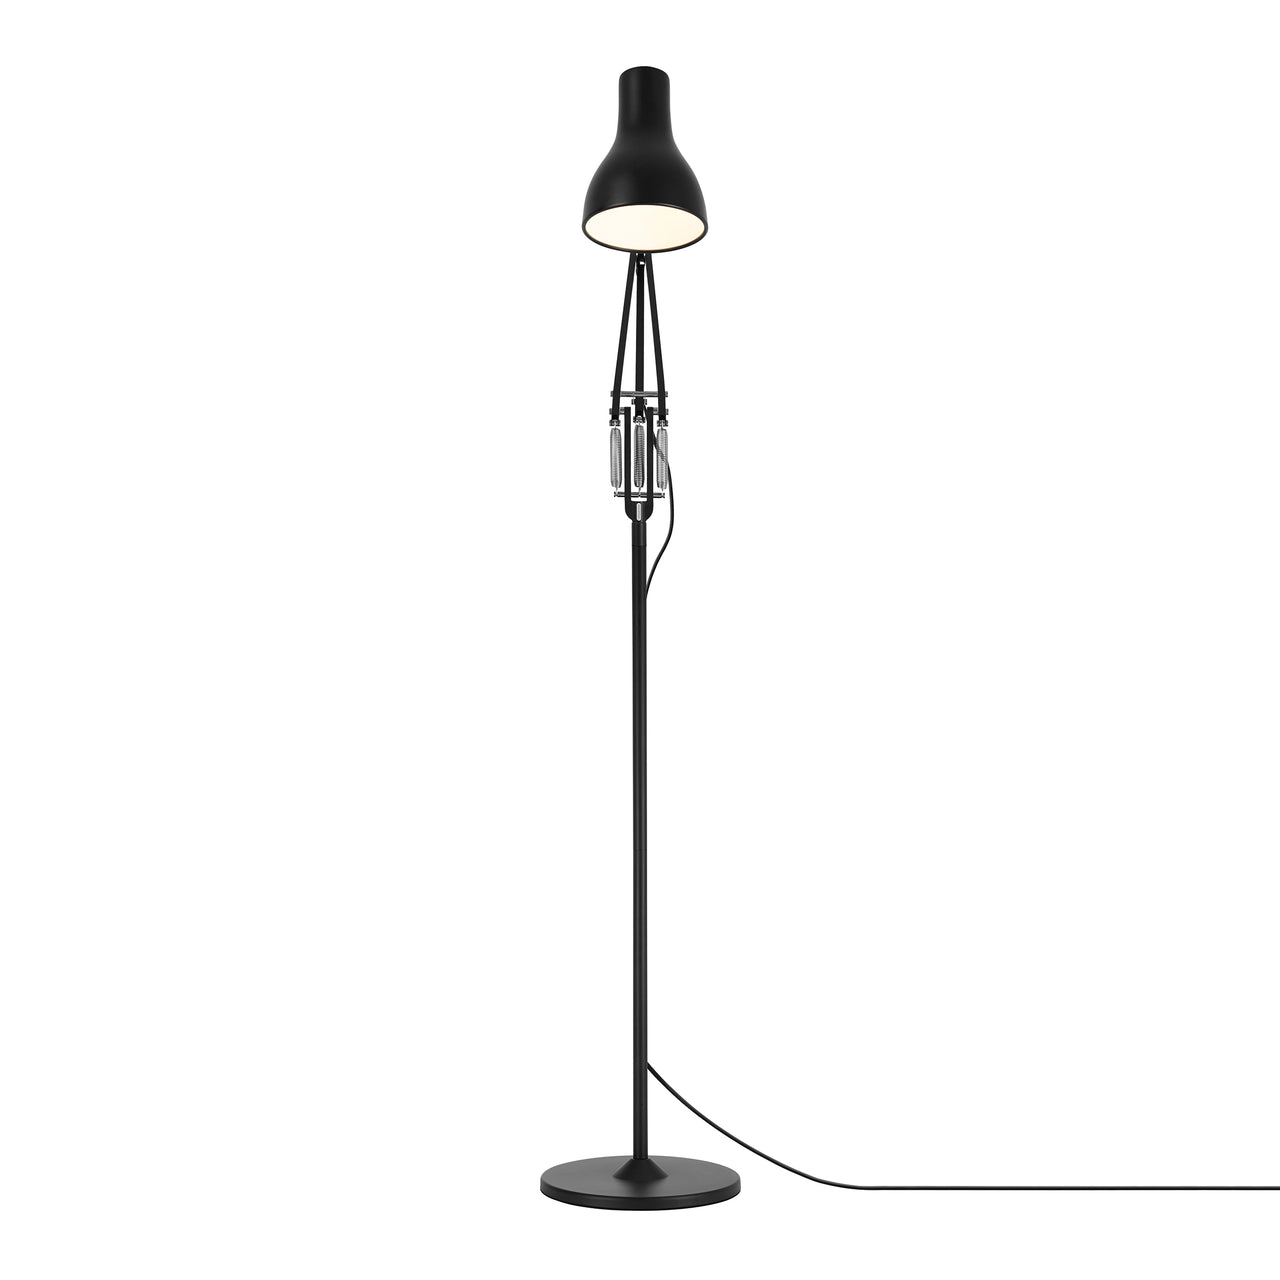 Type 75 Floor Lamp: Jet Black